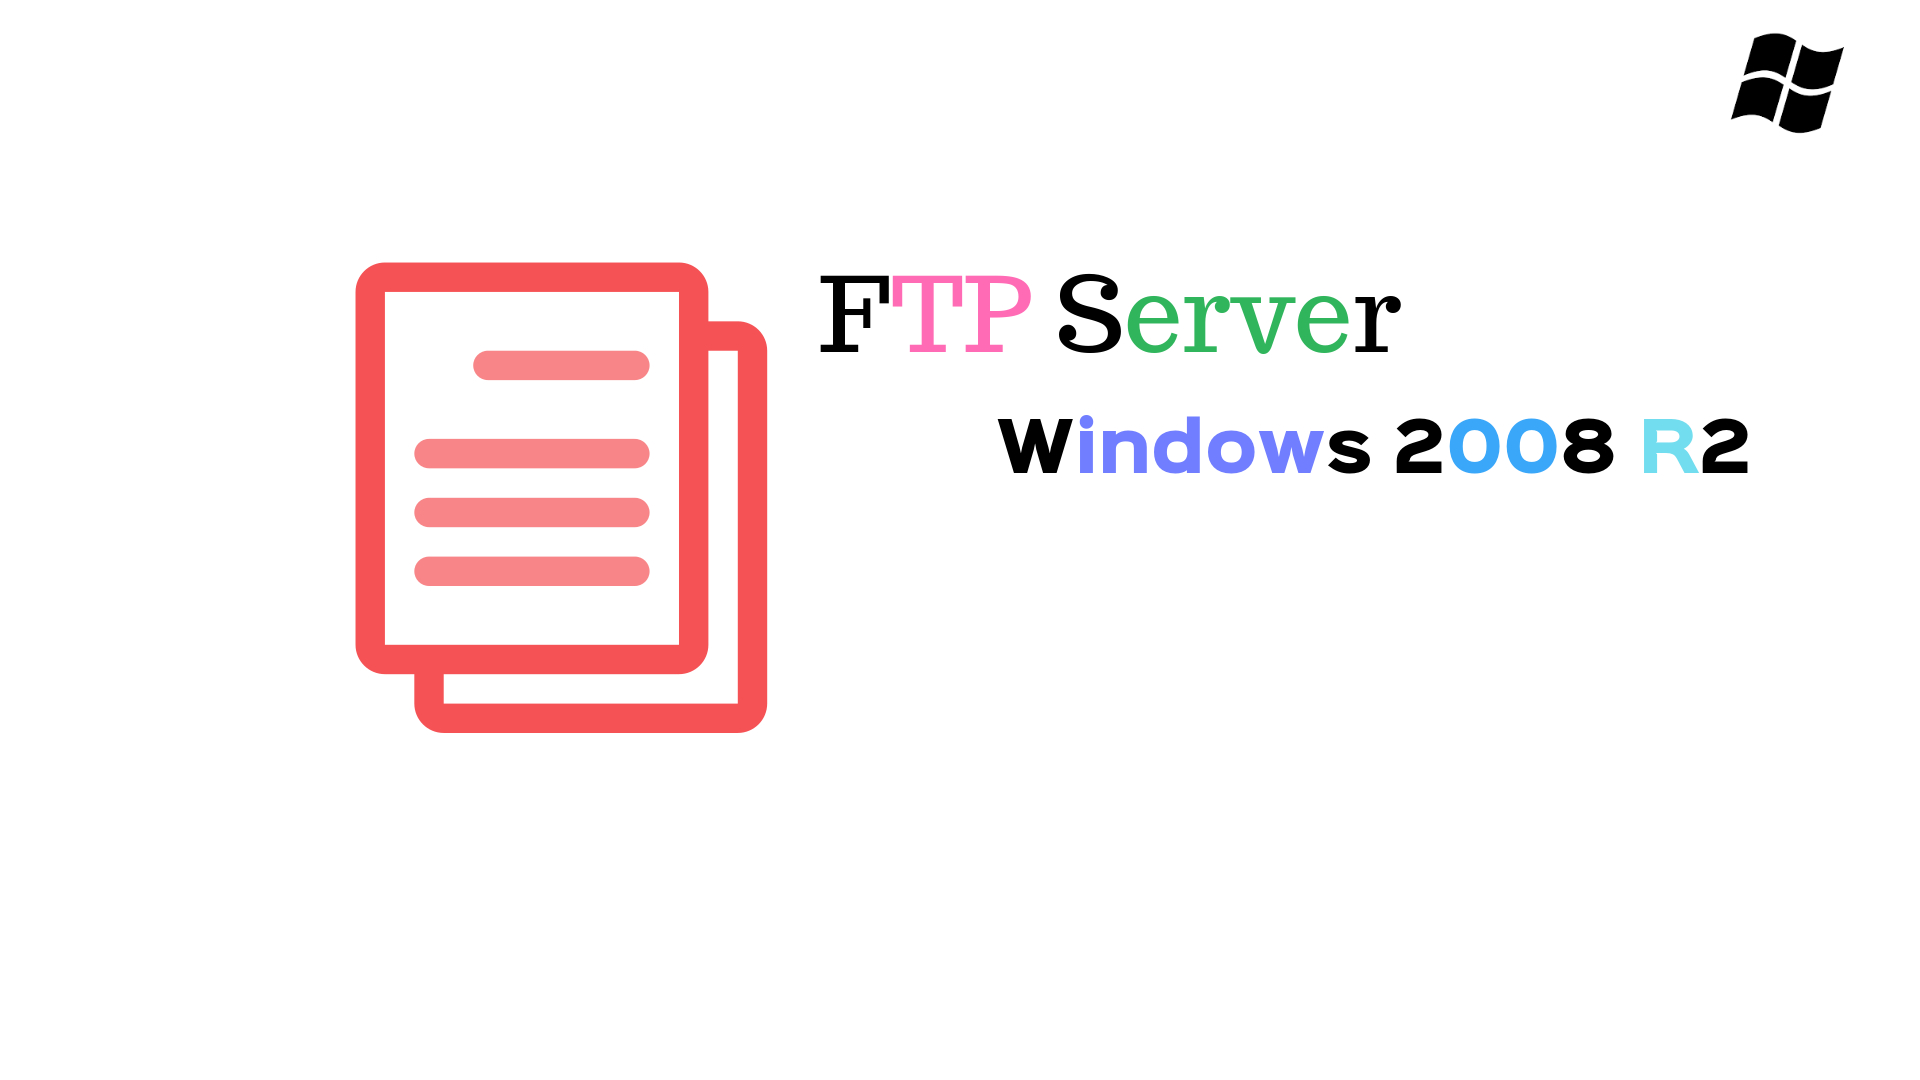 Windows server 2008 r2 ftp access denied